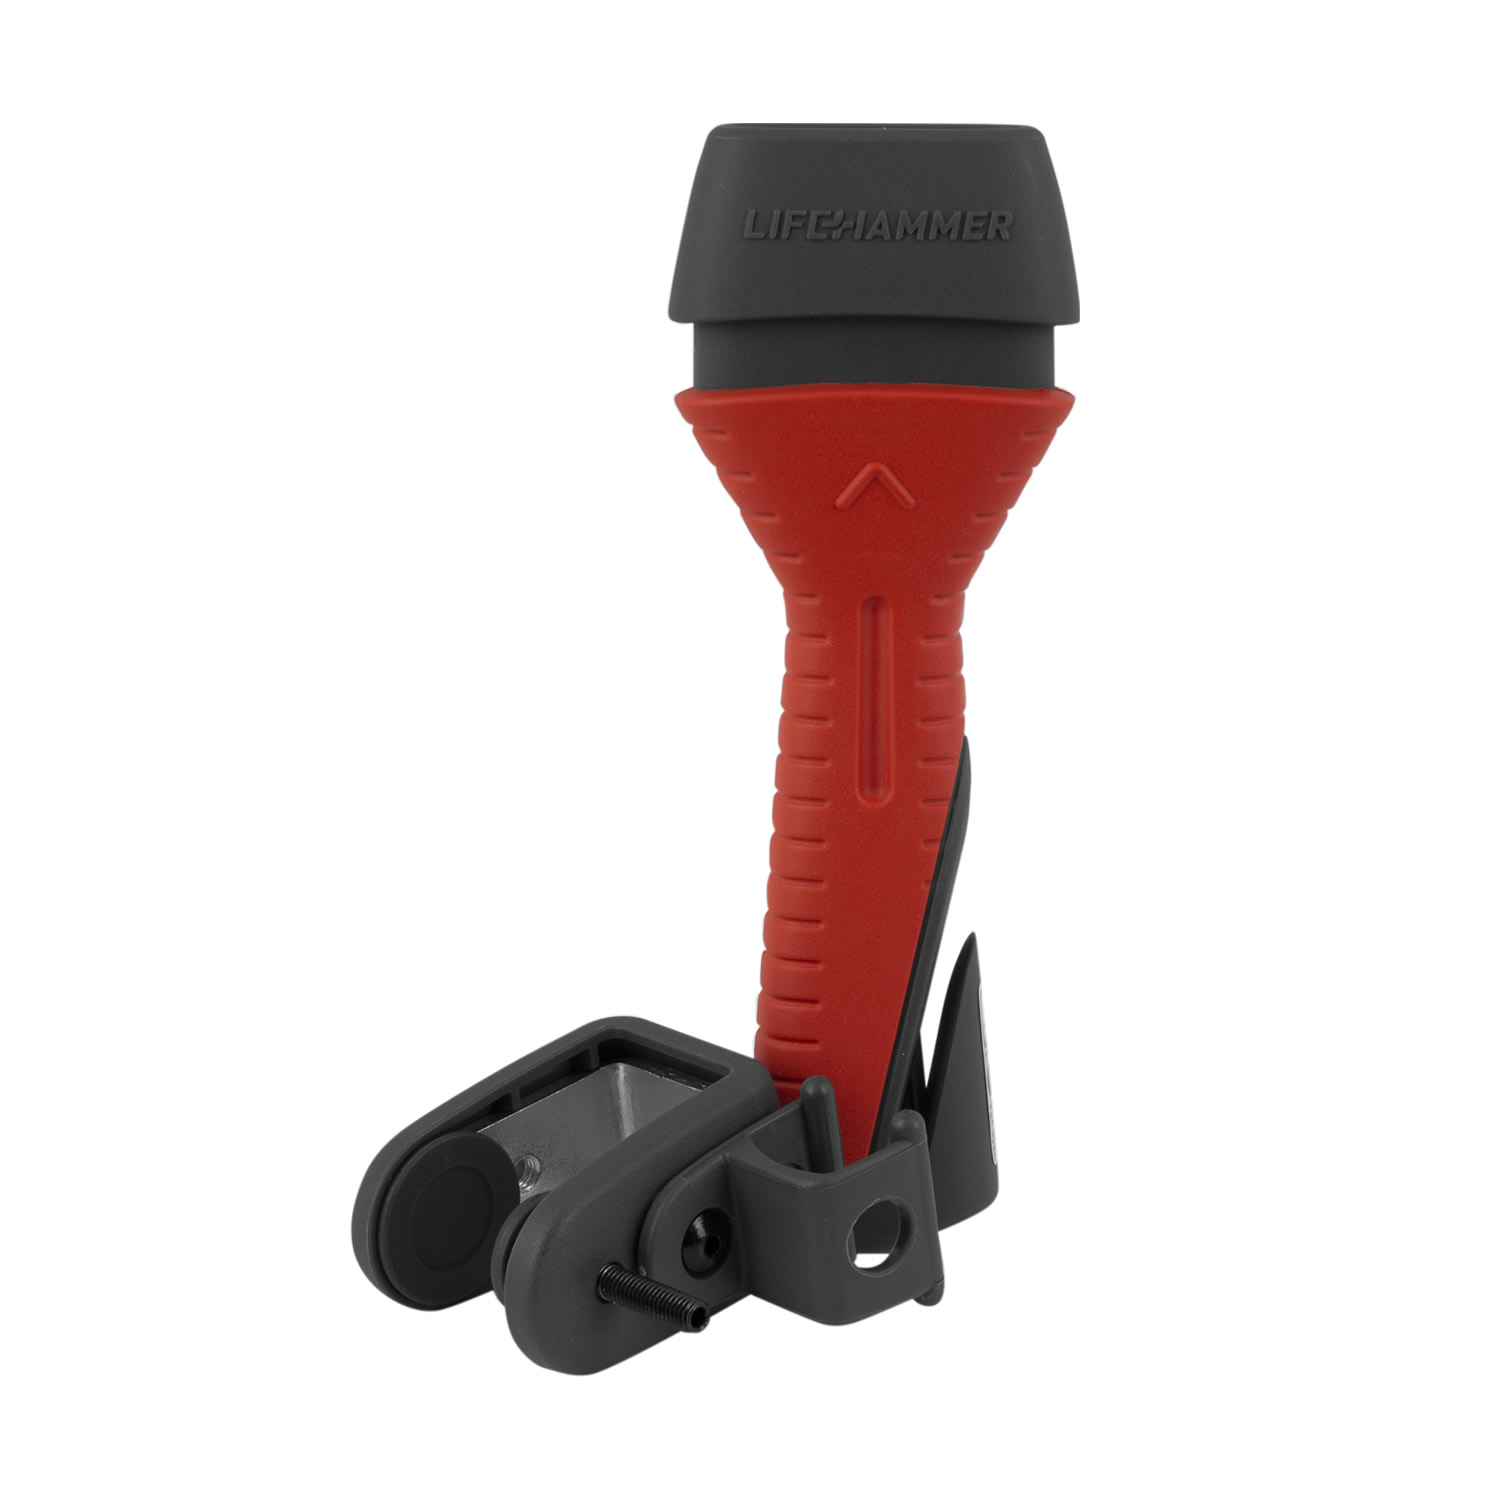 https://www.safelincs.co.uk/shopimages/products/high/lifehammer-window-breaker-seat-belt-cutter-with-bracket-shot.jpg